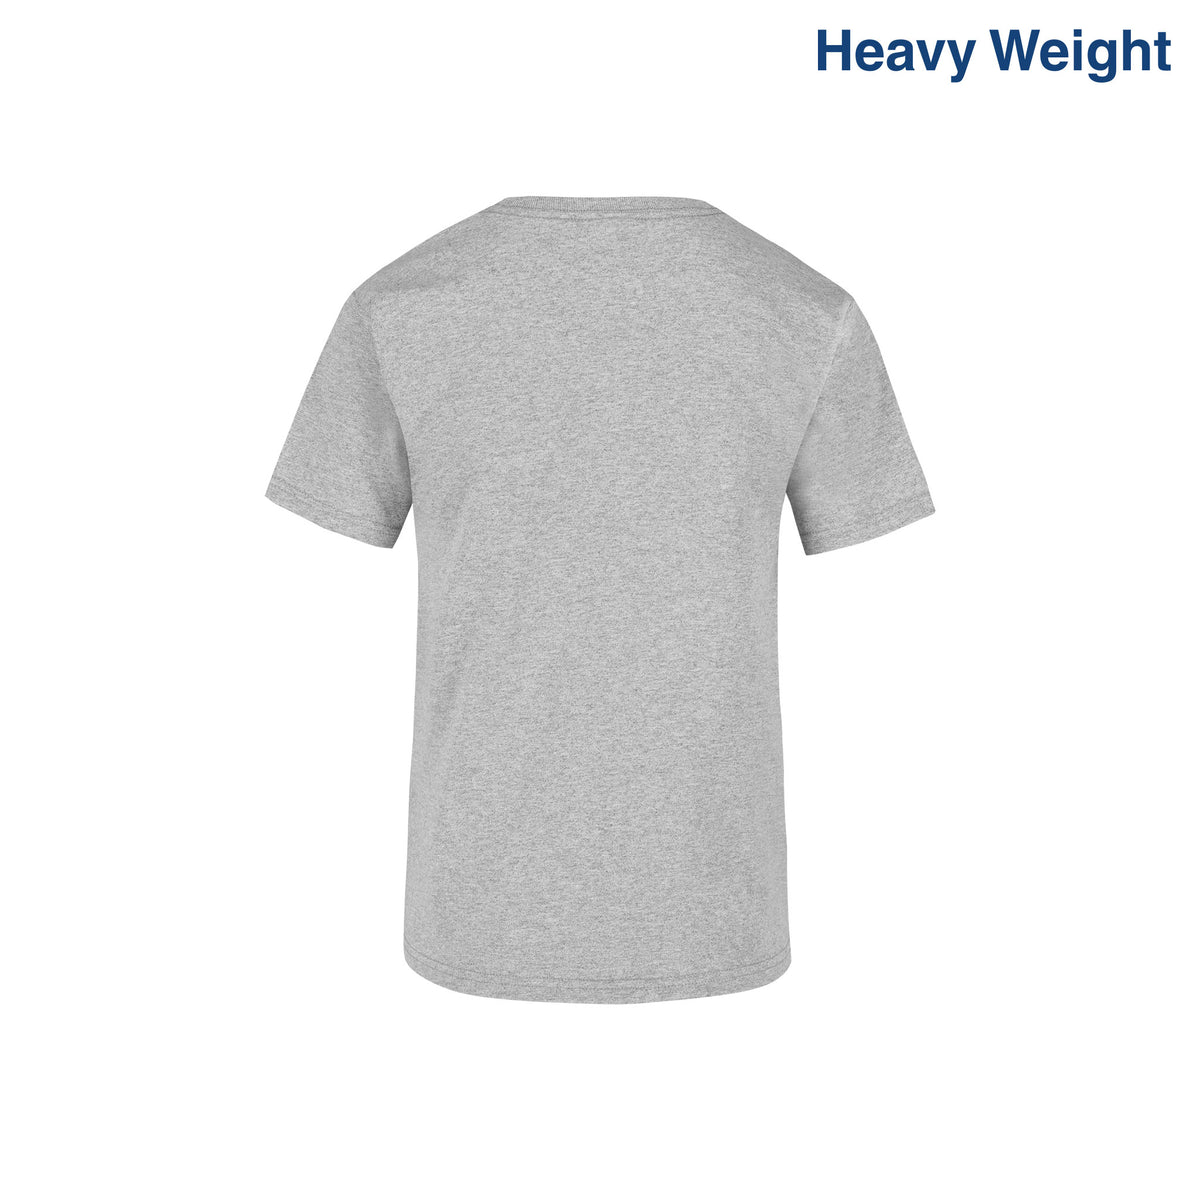 Youth’s Heavy Weight Crew Neck Short Sleeve T-Shirt (Heather grey ...